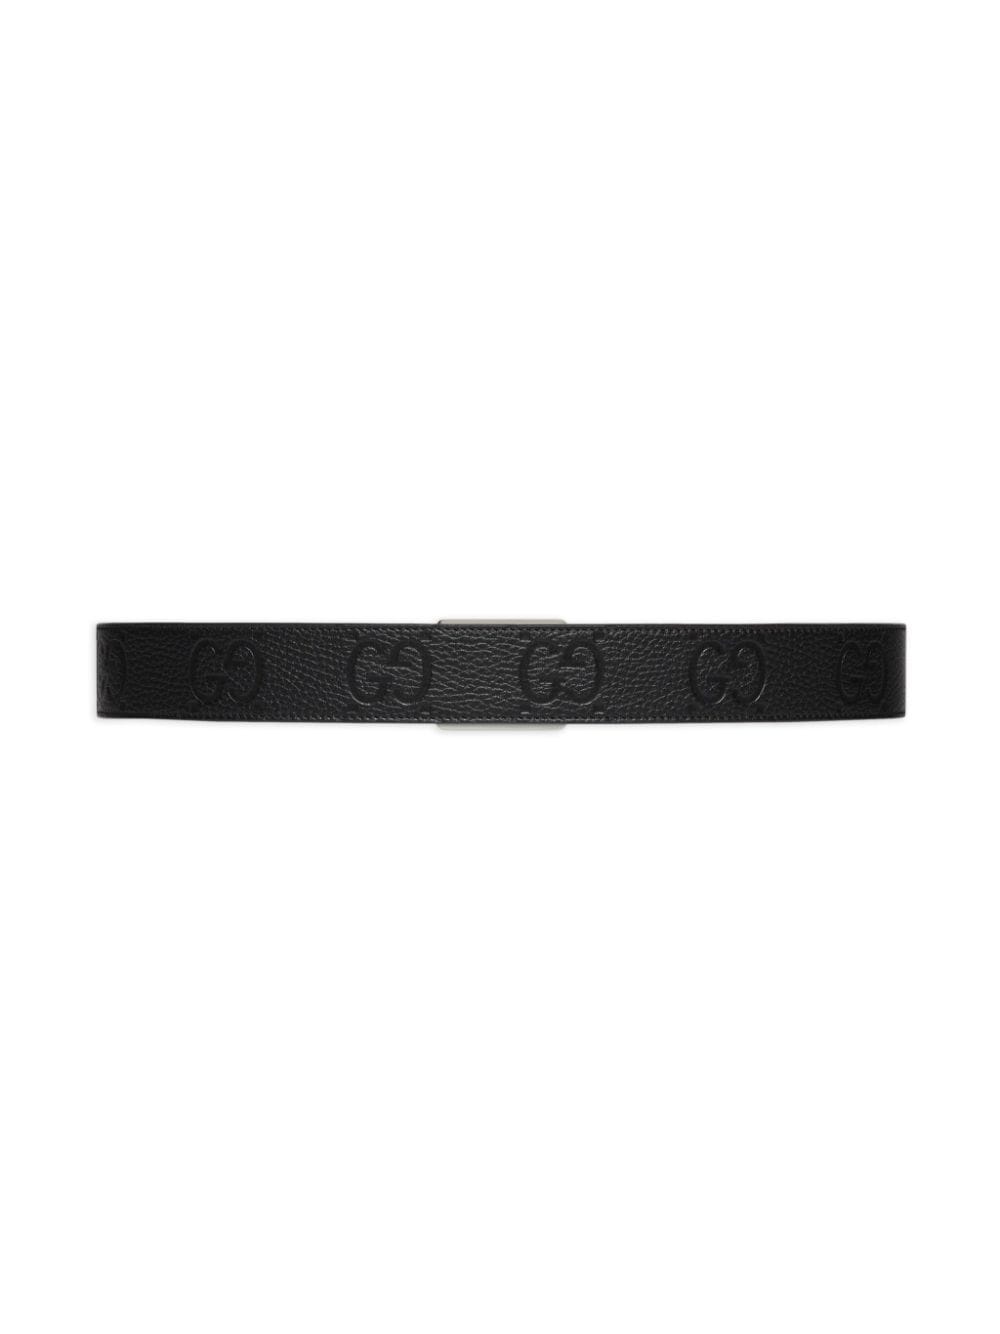 GG logo-debossed leather belt - 3